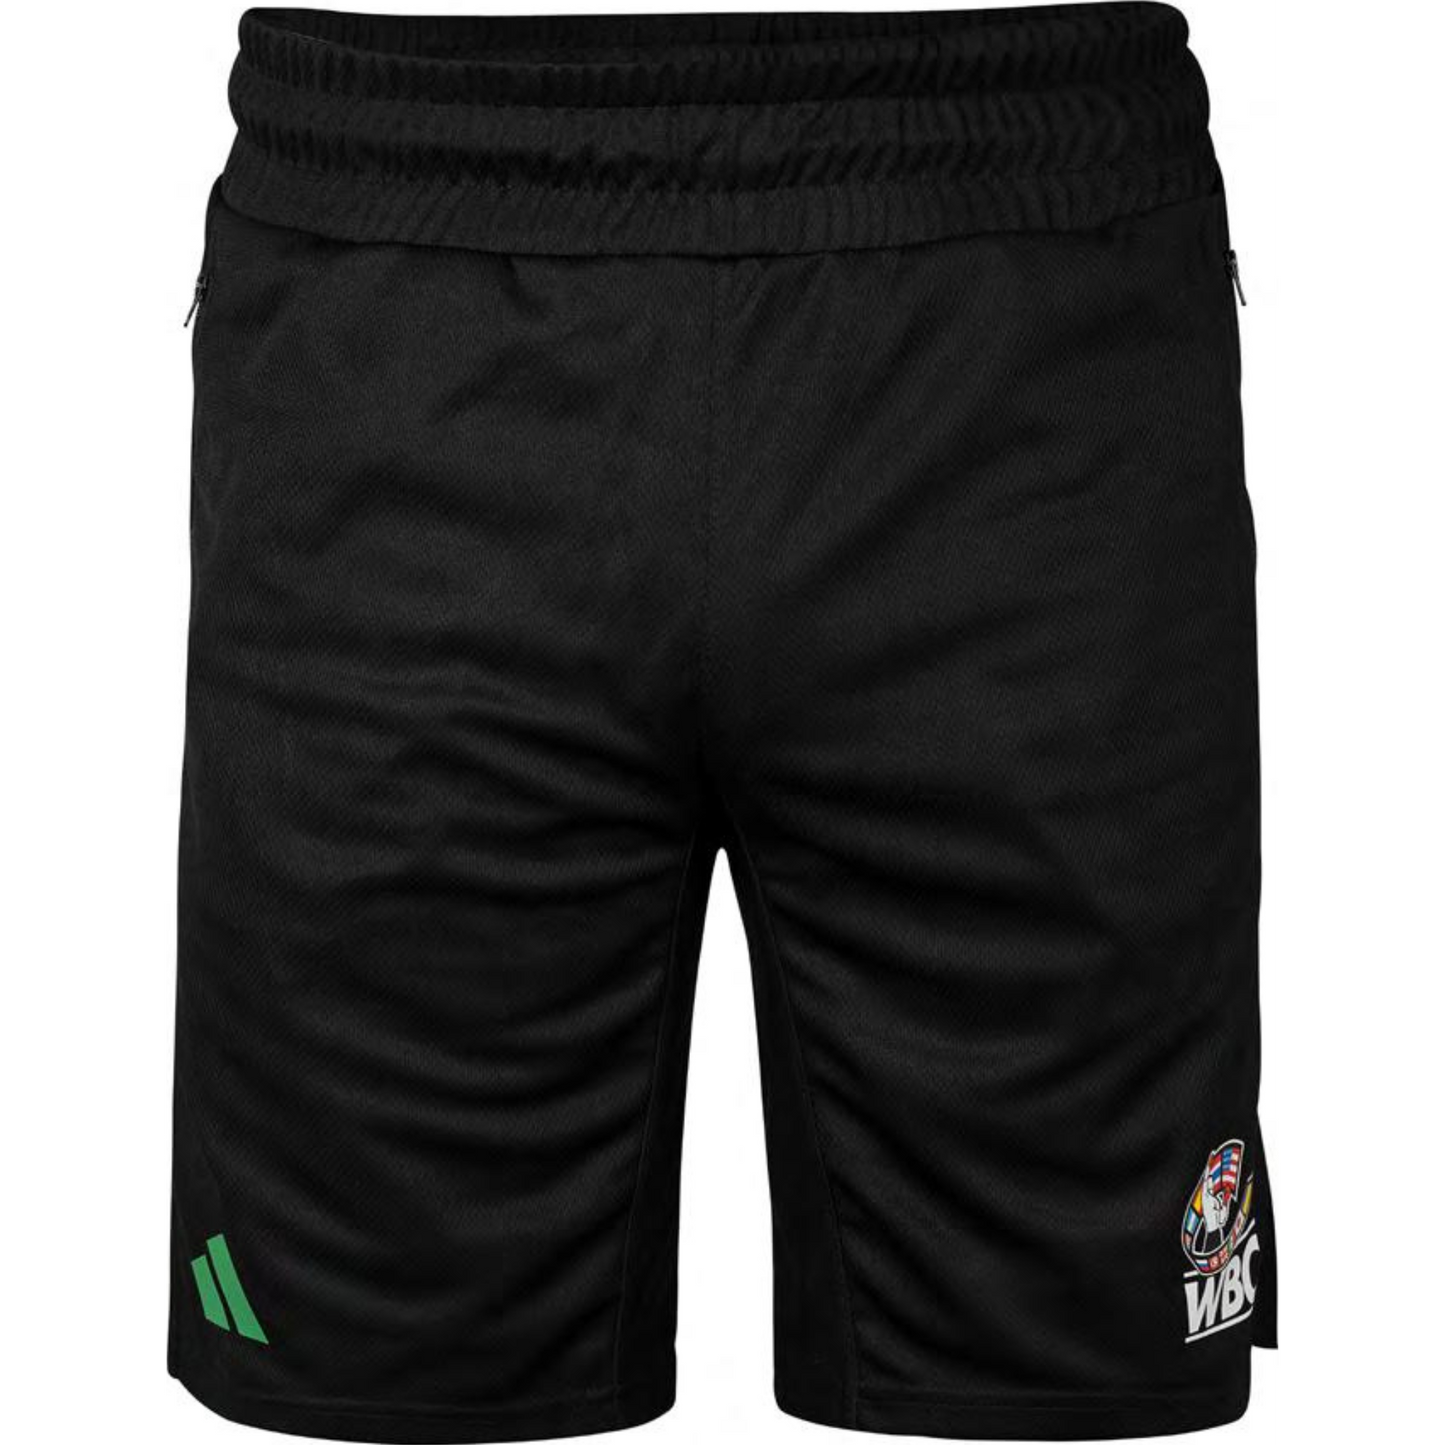 Adidas Adiwbcsh01 Wbc Approved Boxwear Tech Shorts Black 01